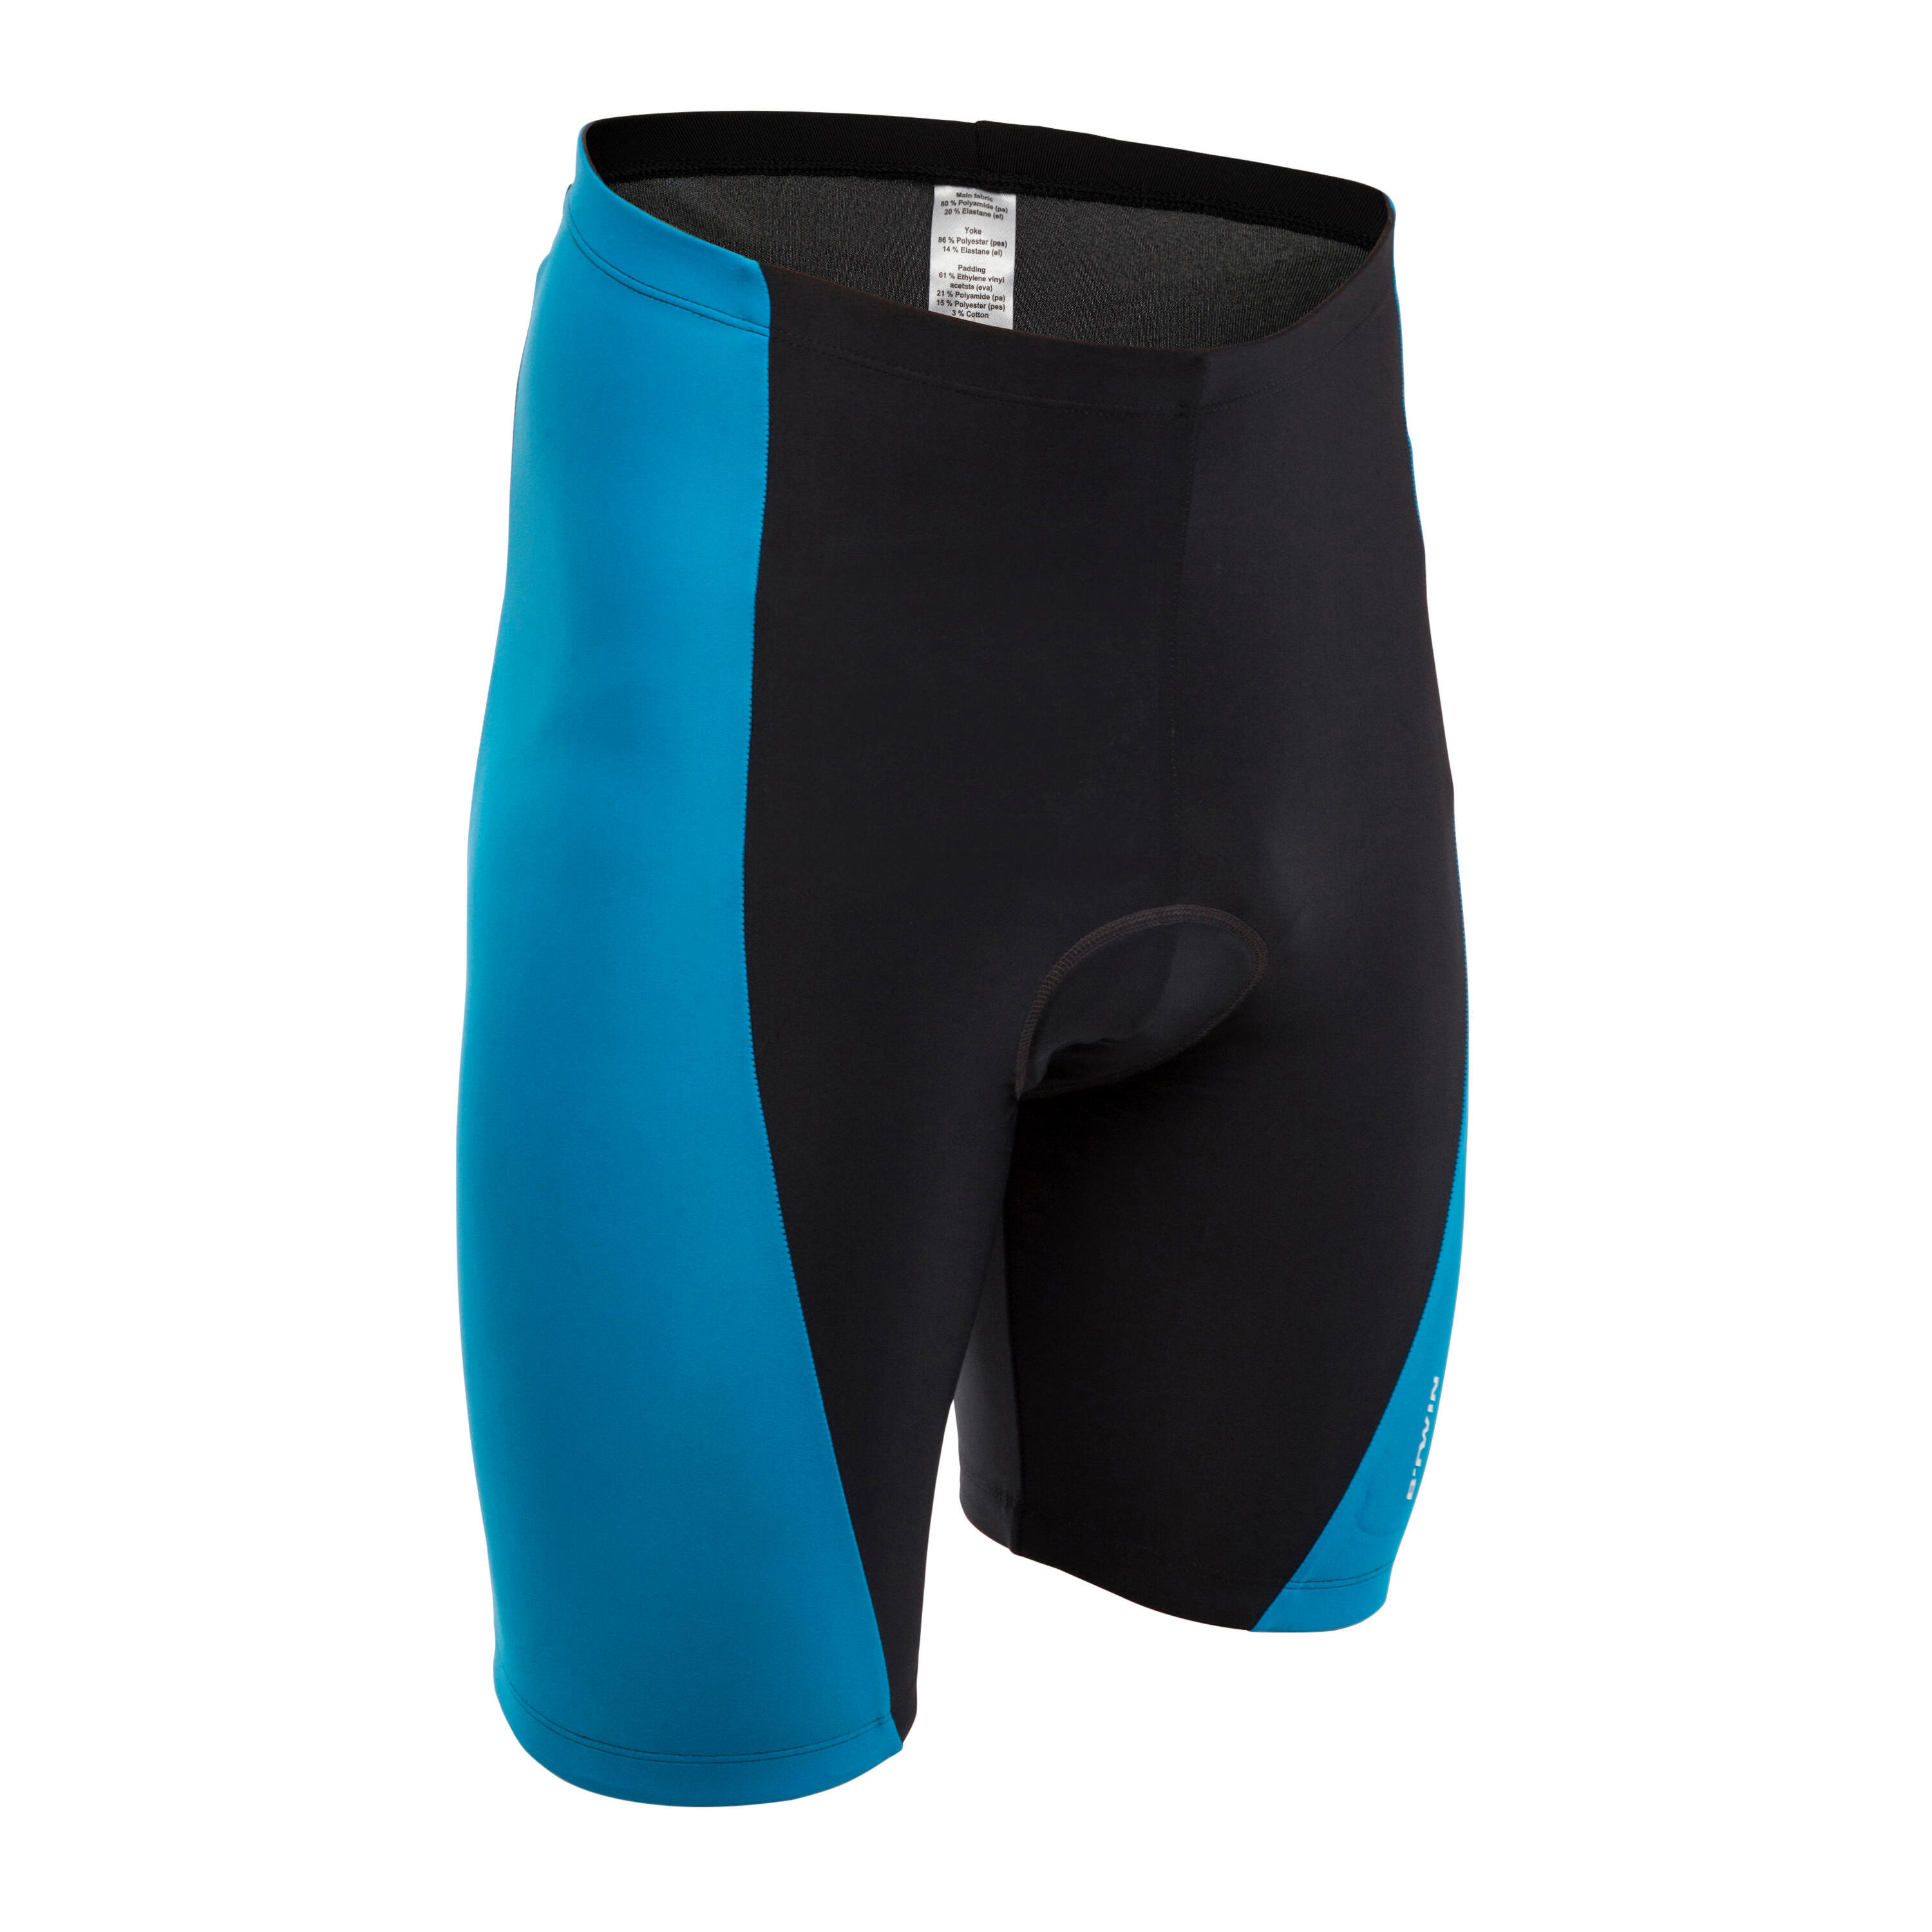 BTWIN 300 Cycling Shorts - Black/Blue